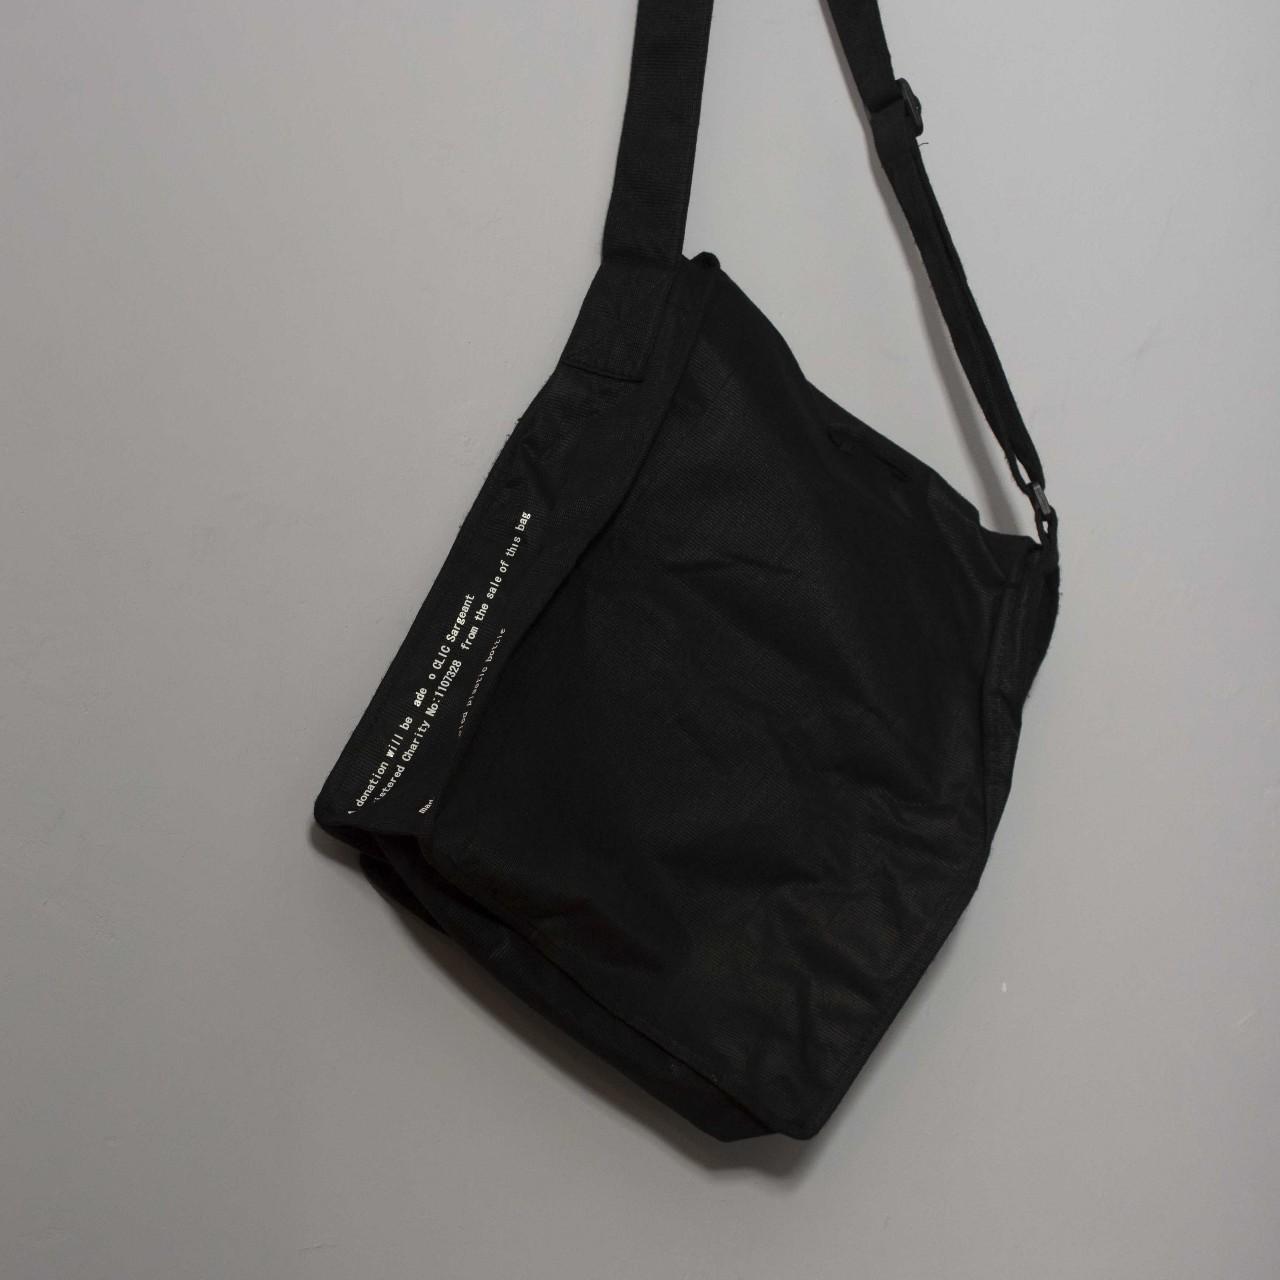 HMV record bag in black with white printed detail.... - Depop